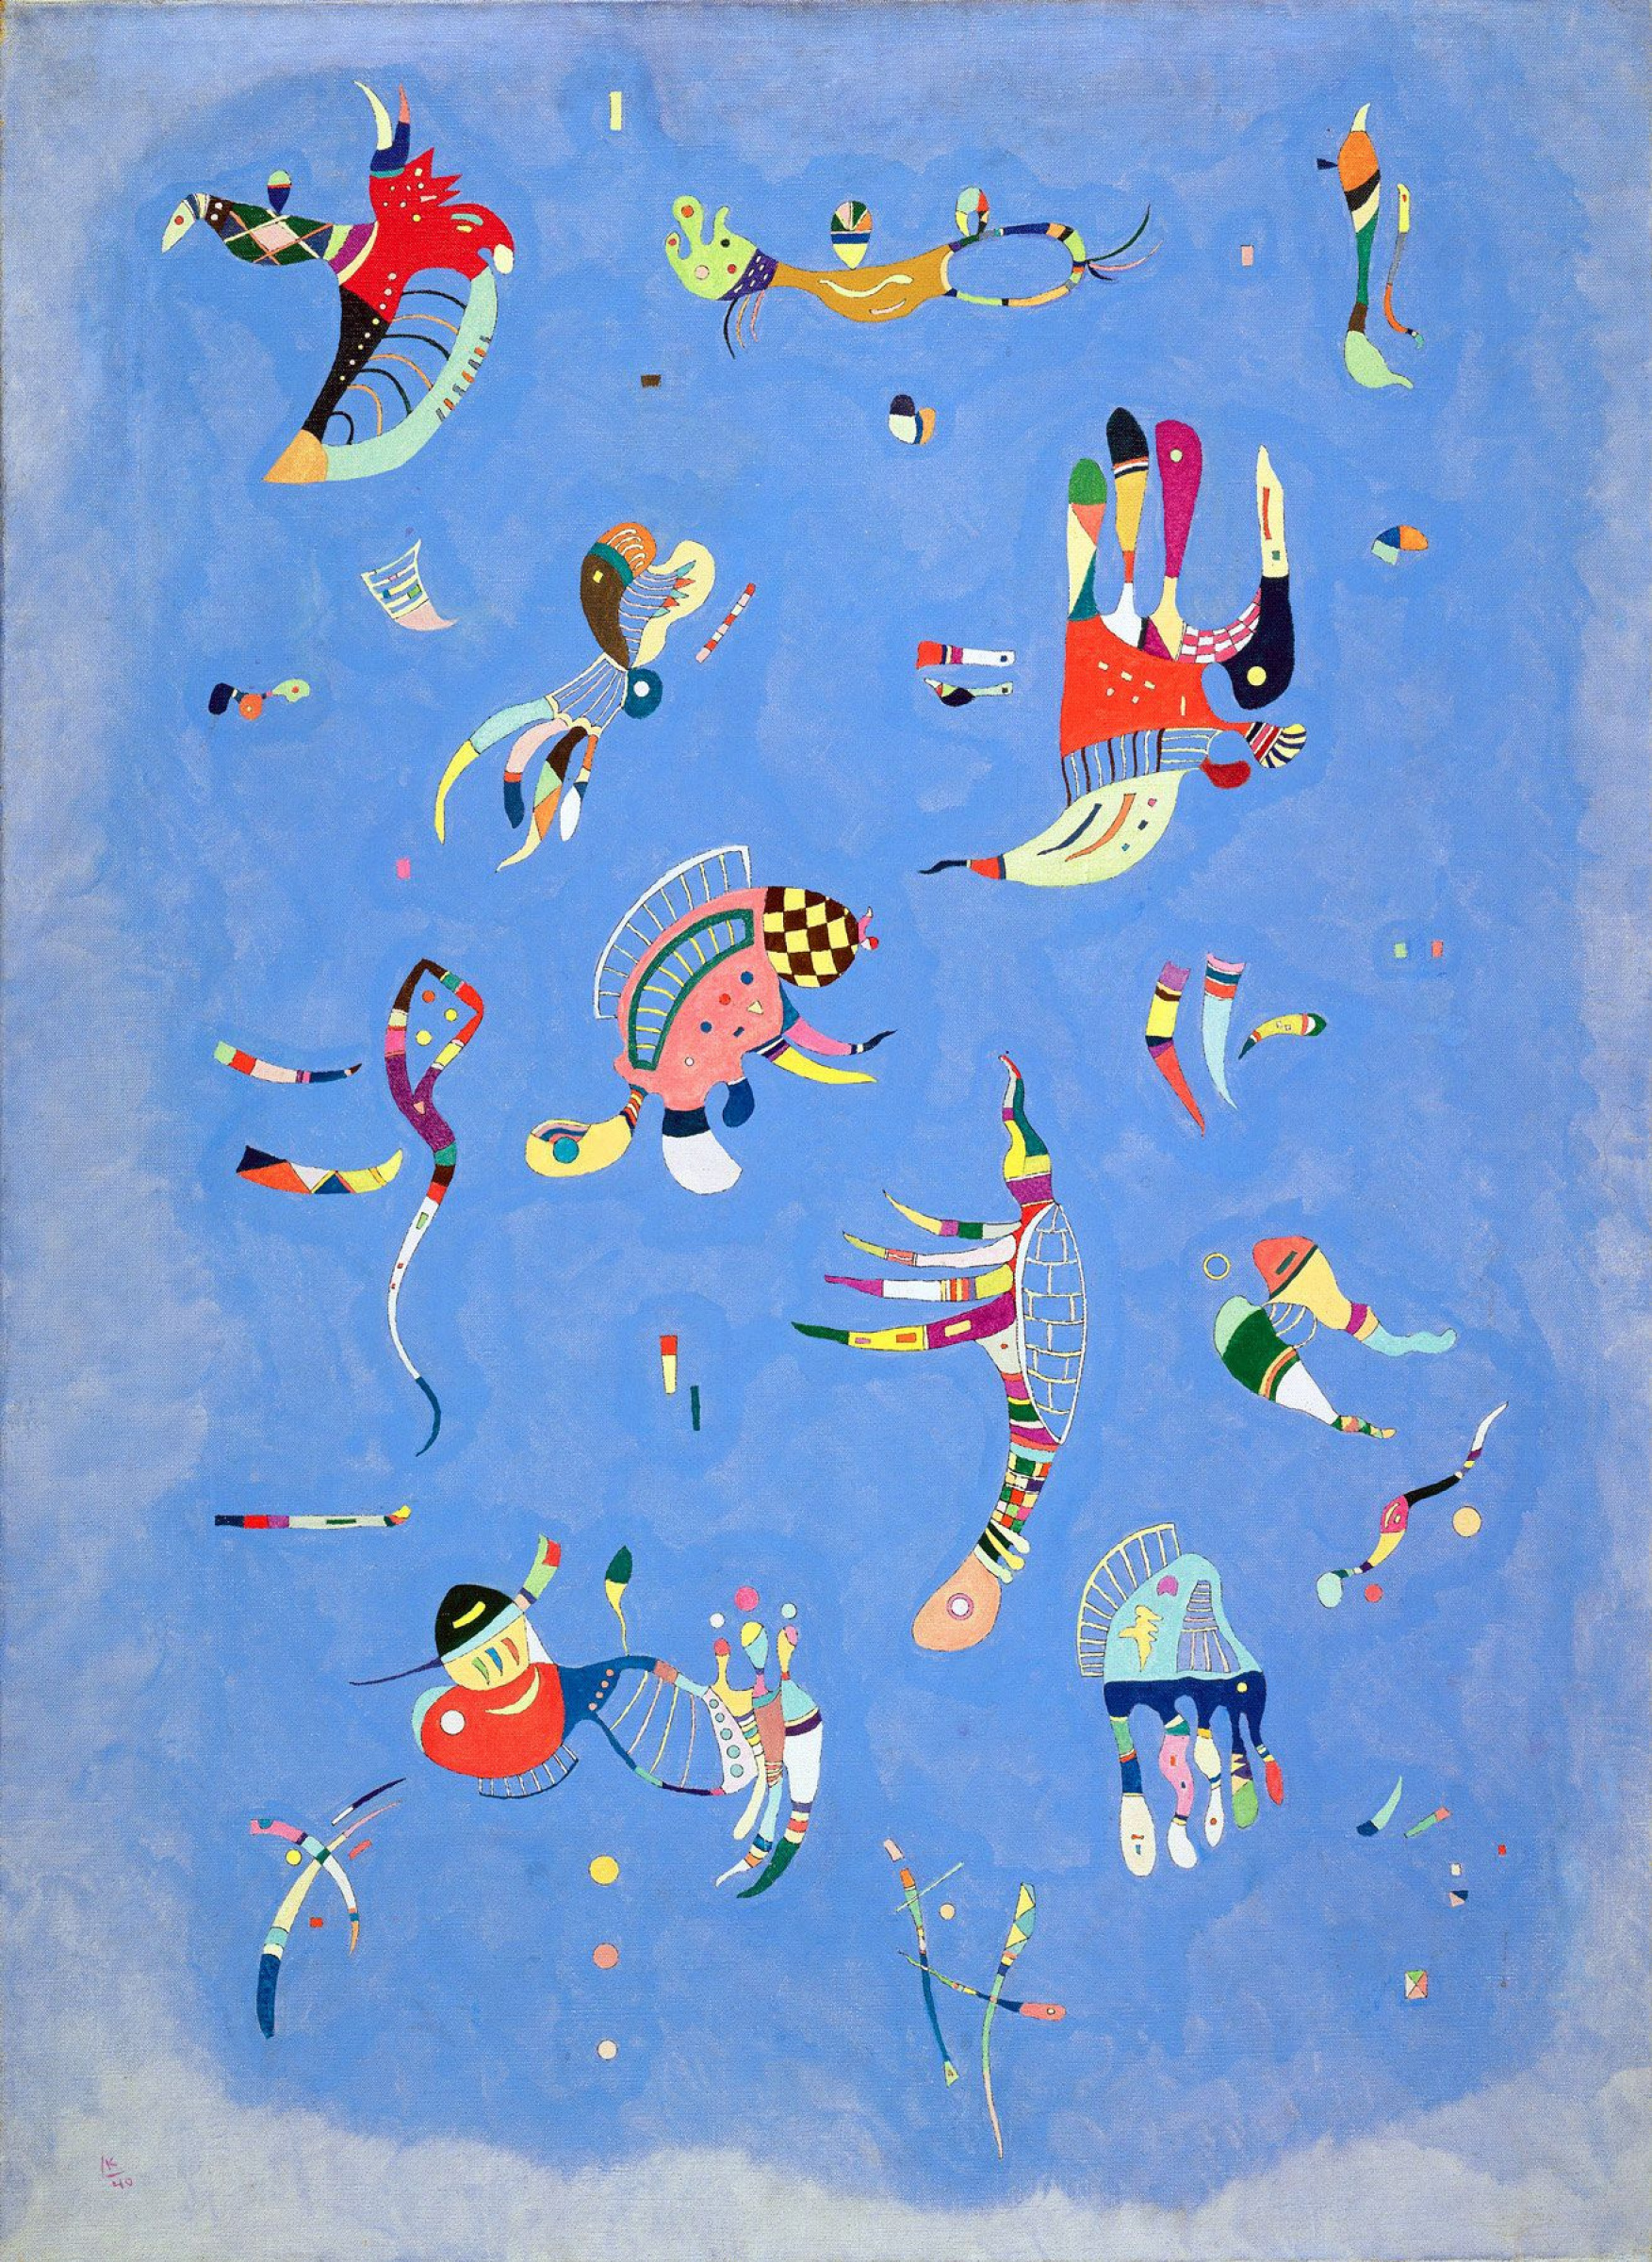 Василий Кандинский - Синее небо, 1940, 73×100 см: Описание произведения